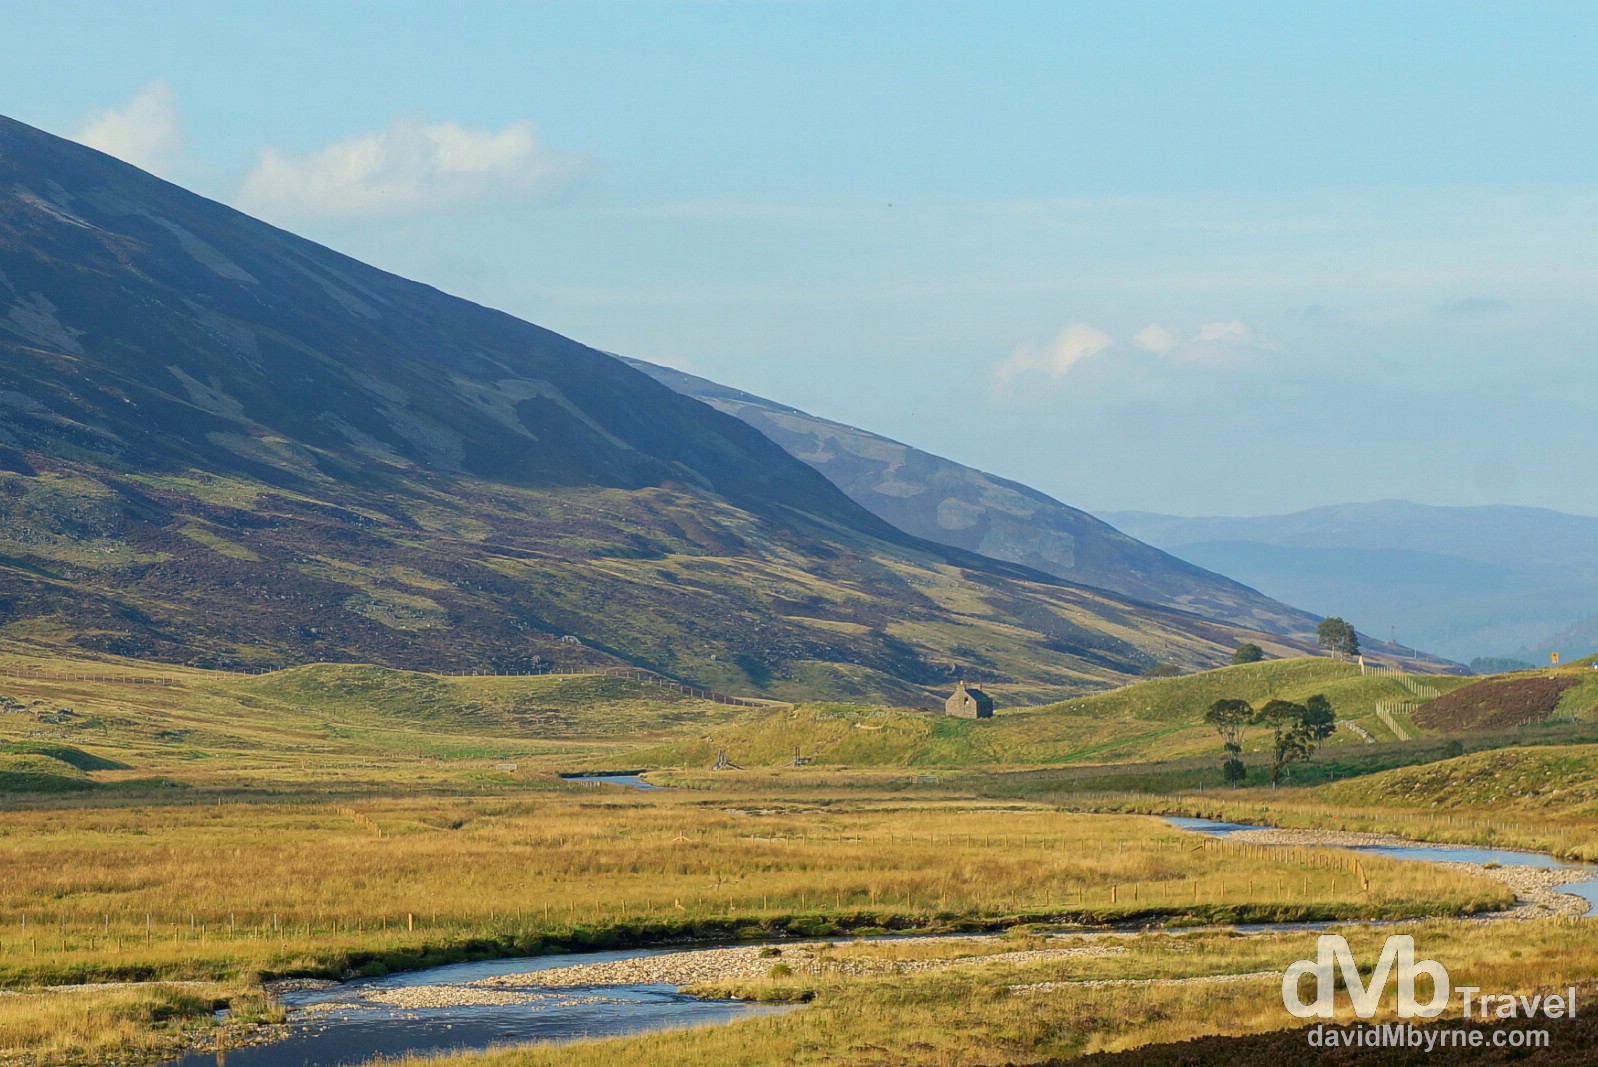 Scenery in Cairngorms National Park, Scotland. September 13, 2014.